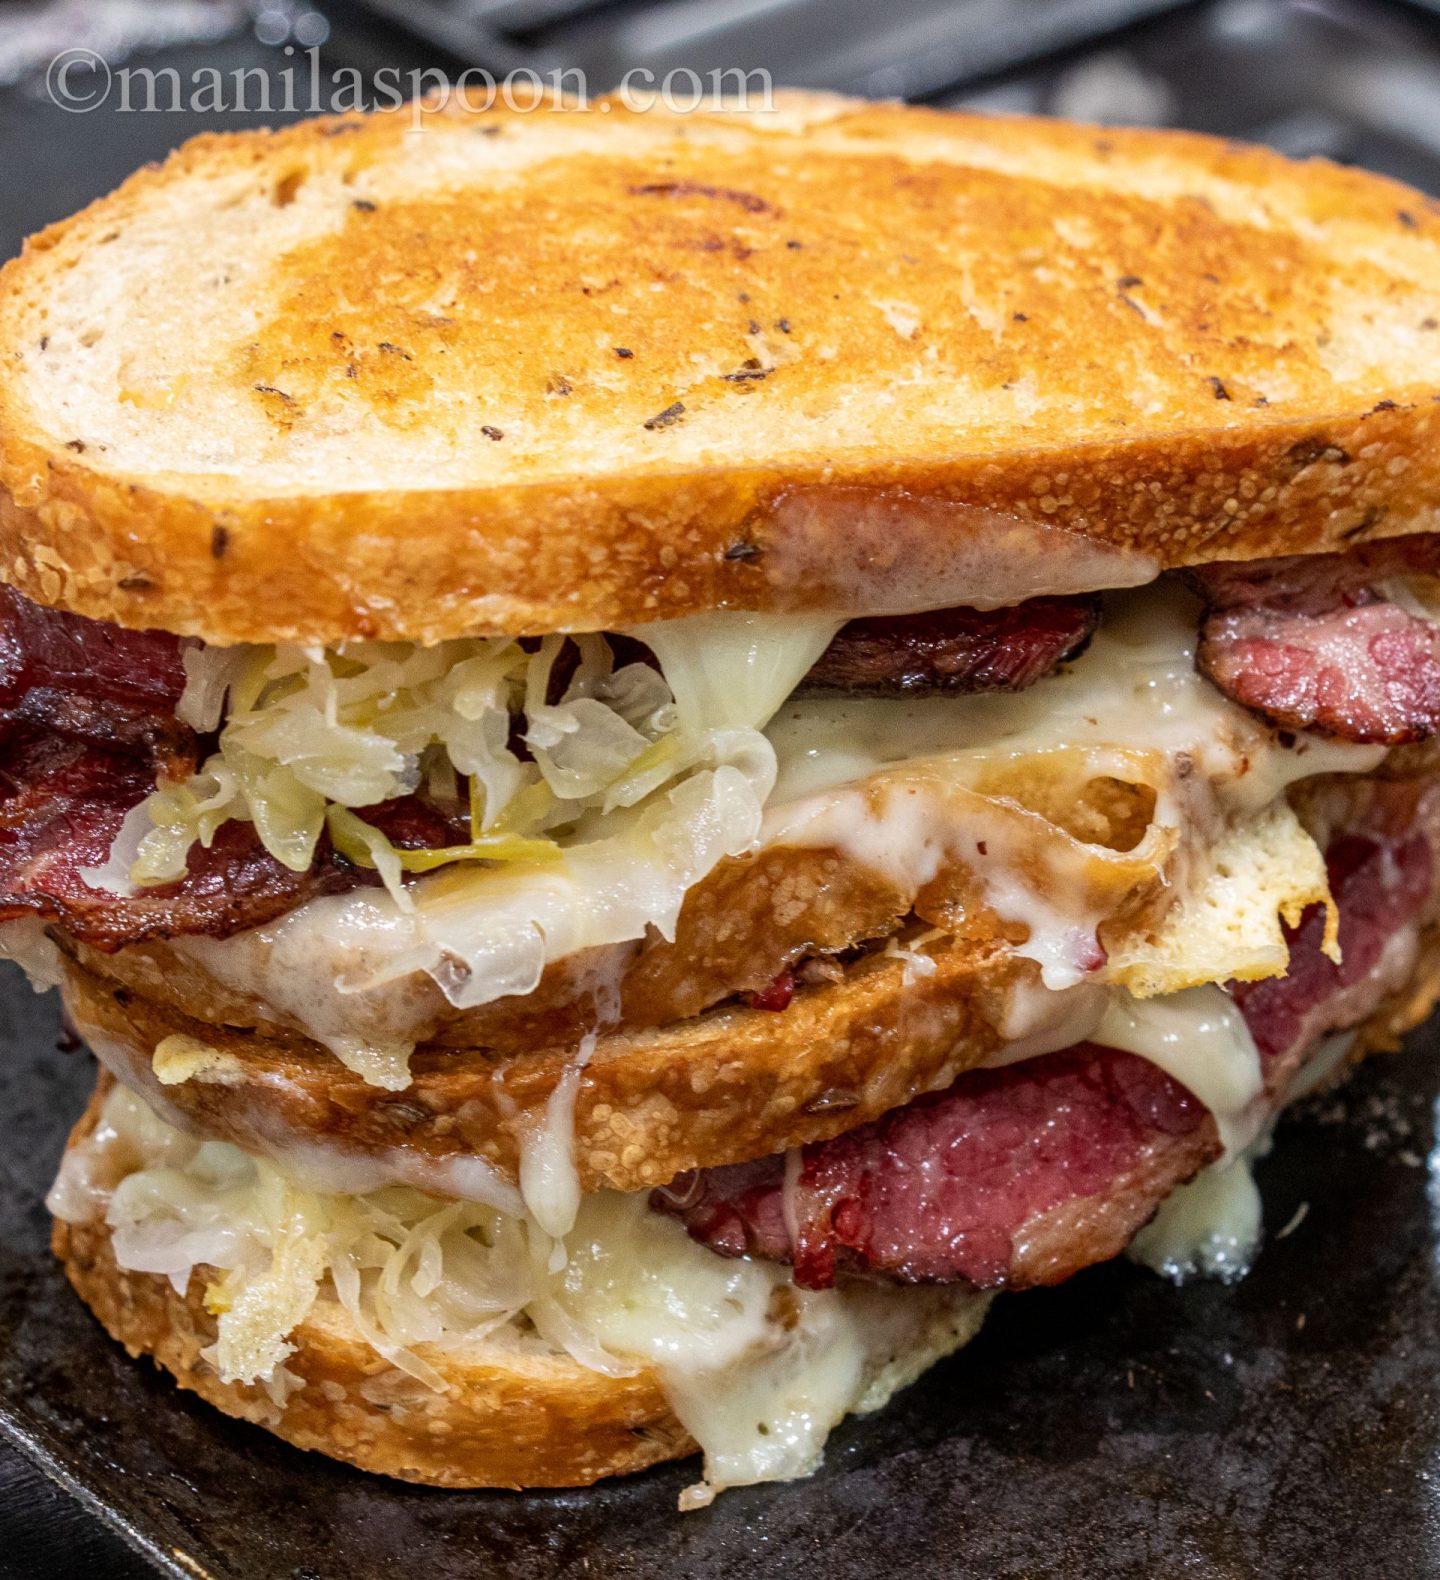 How to Make a classic Reuben sandwich